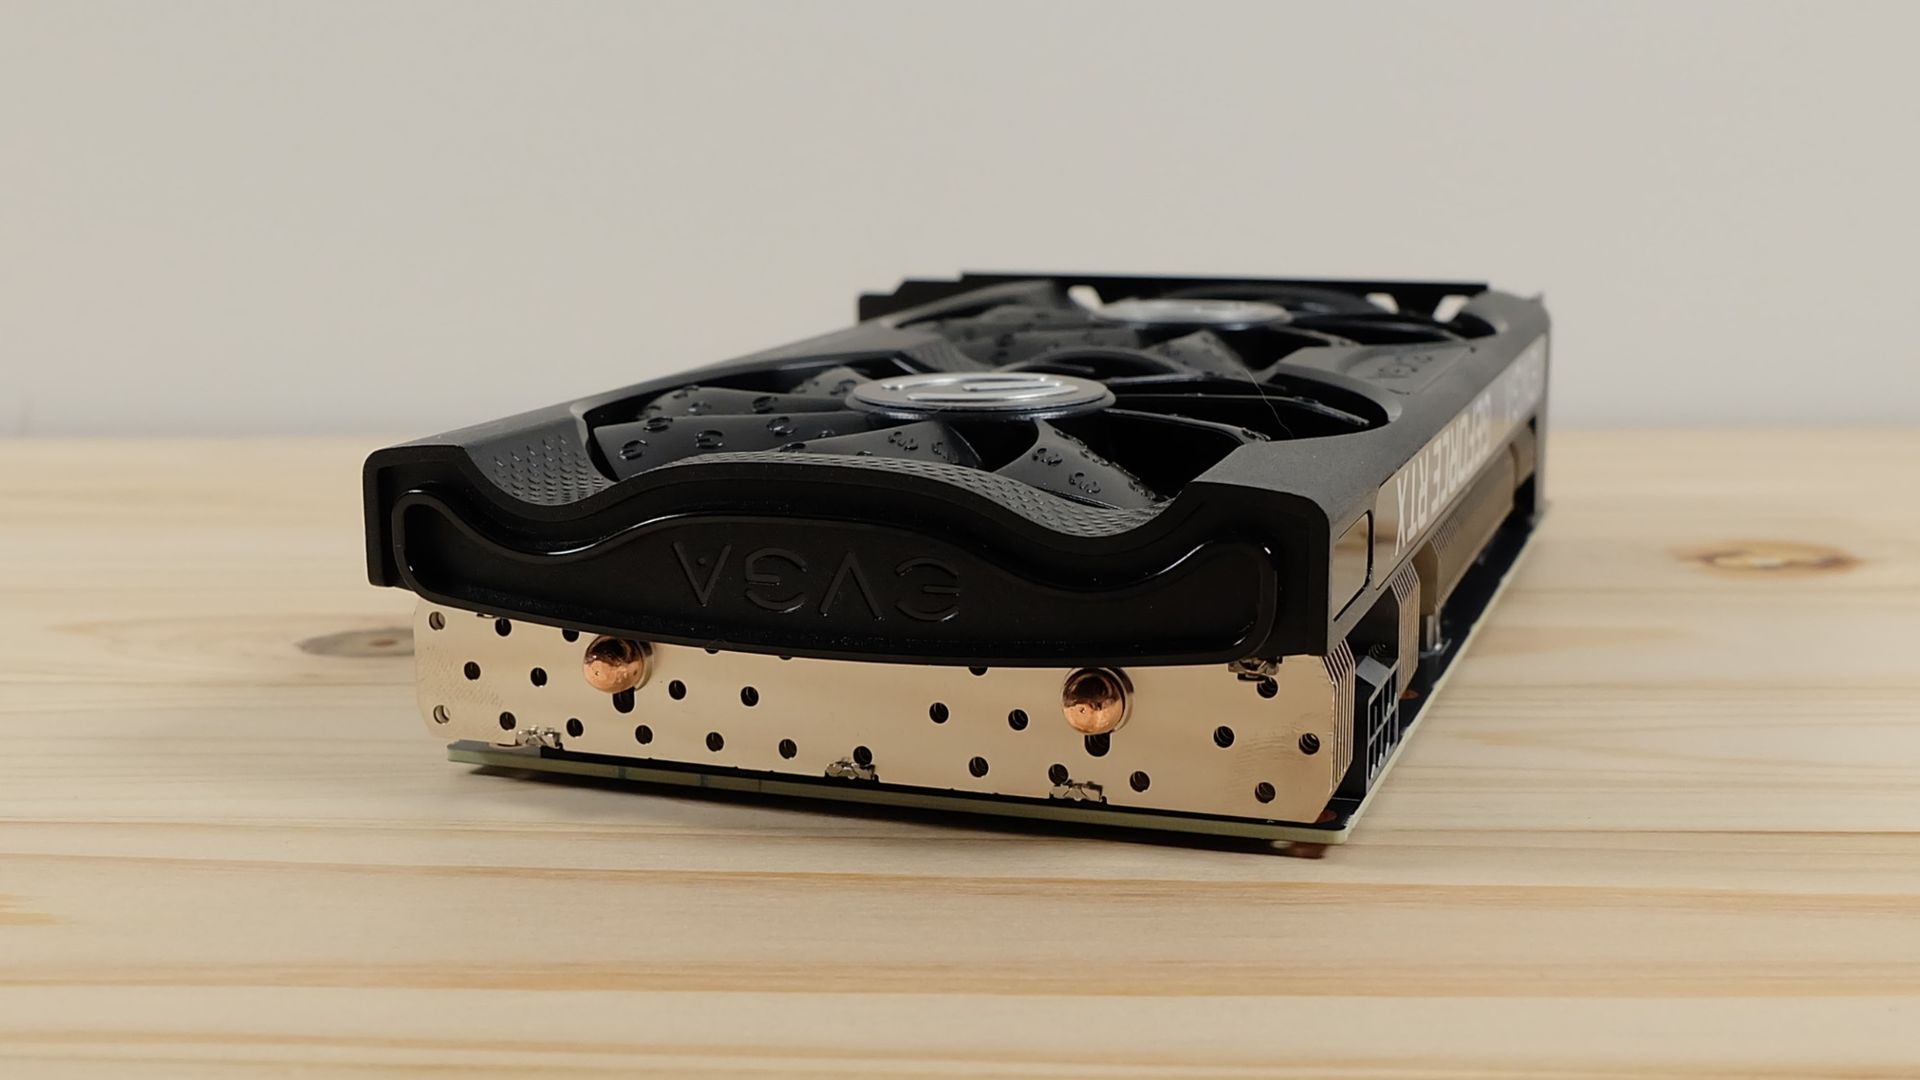 EVGA GeForce RTX 3050 XC Black Gaming Обзор